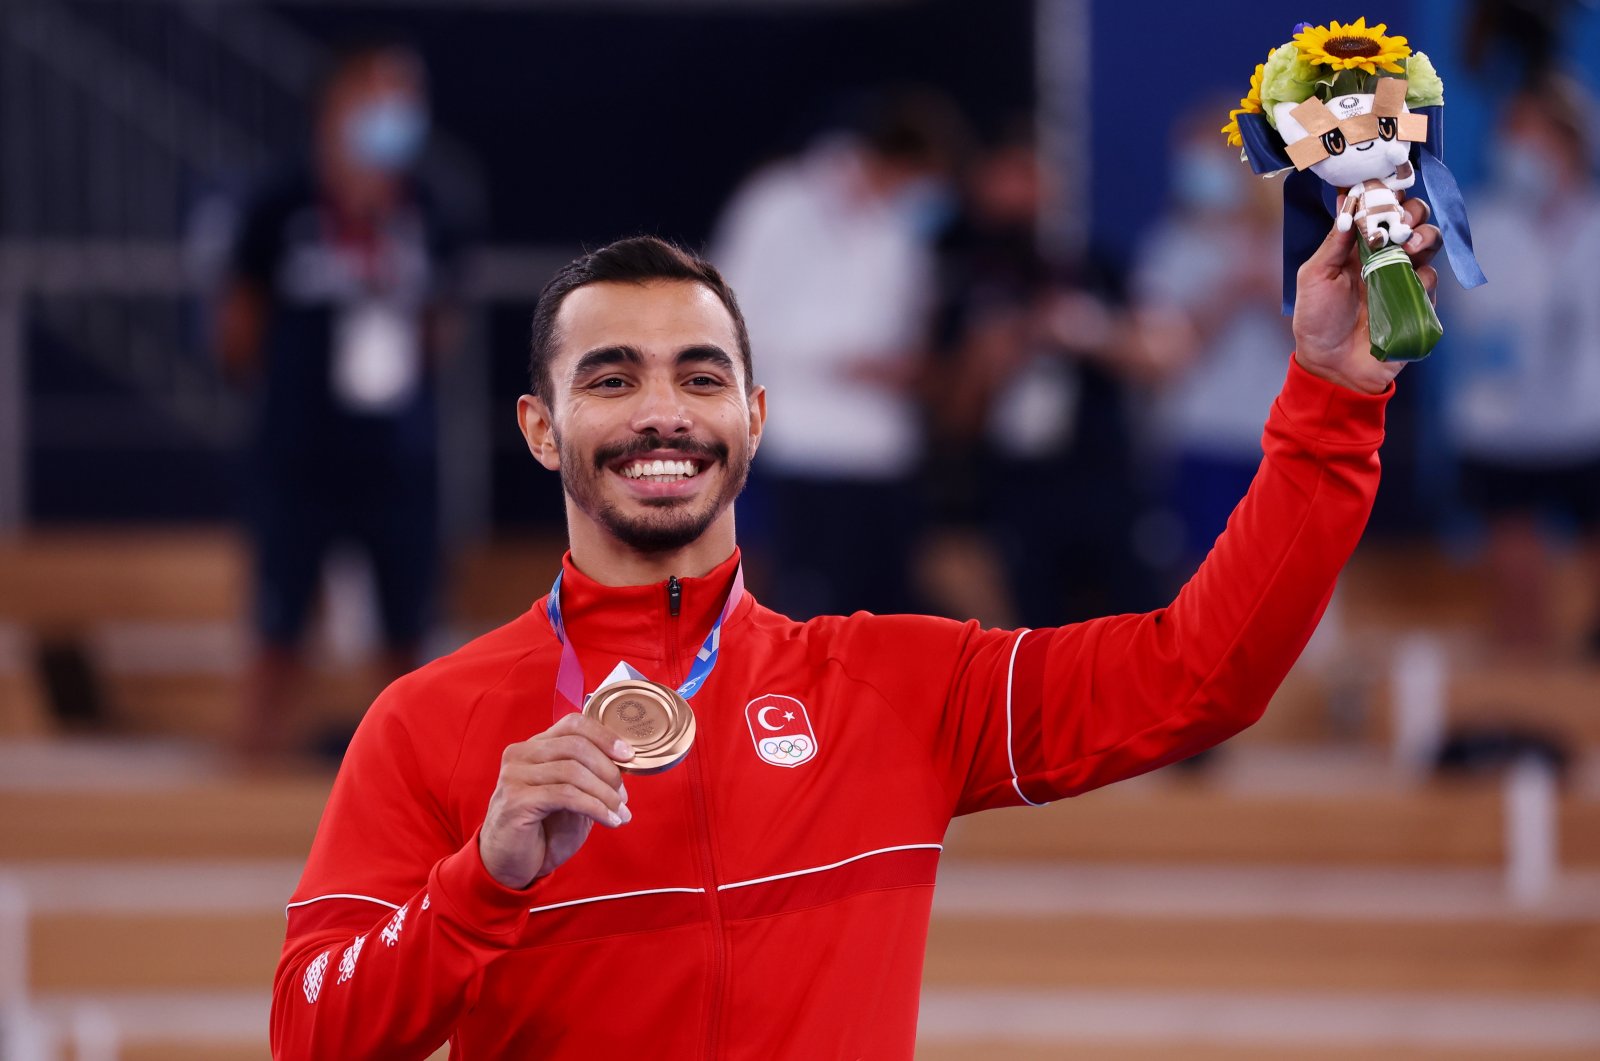 Turkey's Ferhat Arıcan celebrates winning bronze in men's parallel bars at the Tokyo 2020 Olympics, Ariake Gymnastics Centre, Tokyo, Japan, Aug. 3, 2021. (Reuters Photo)